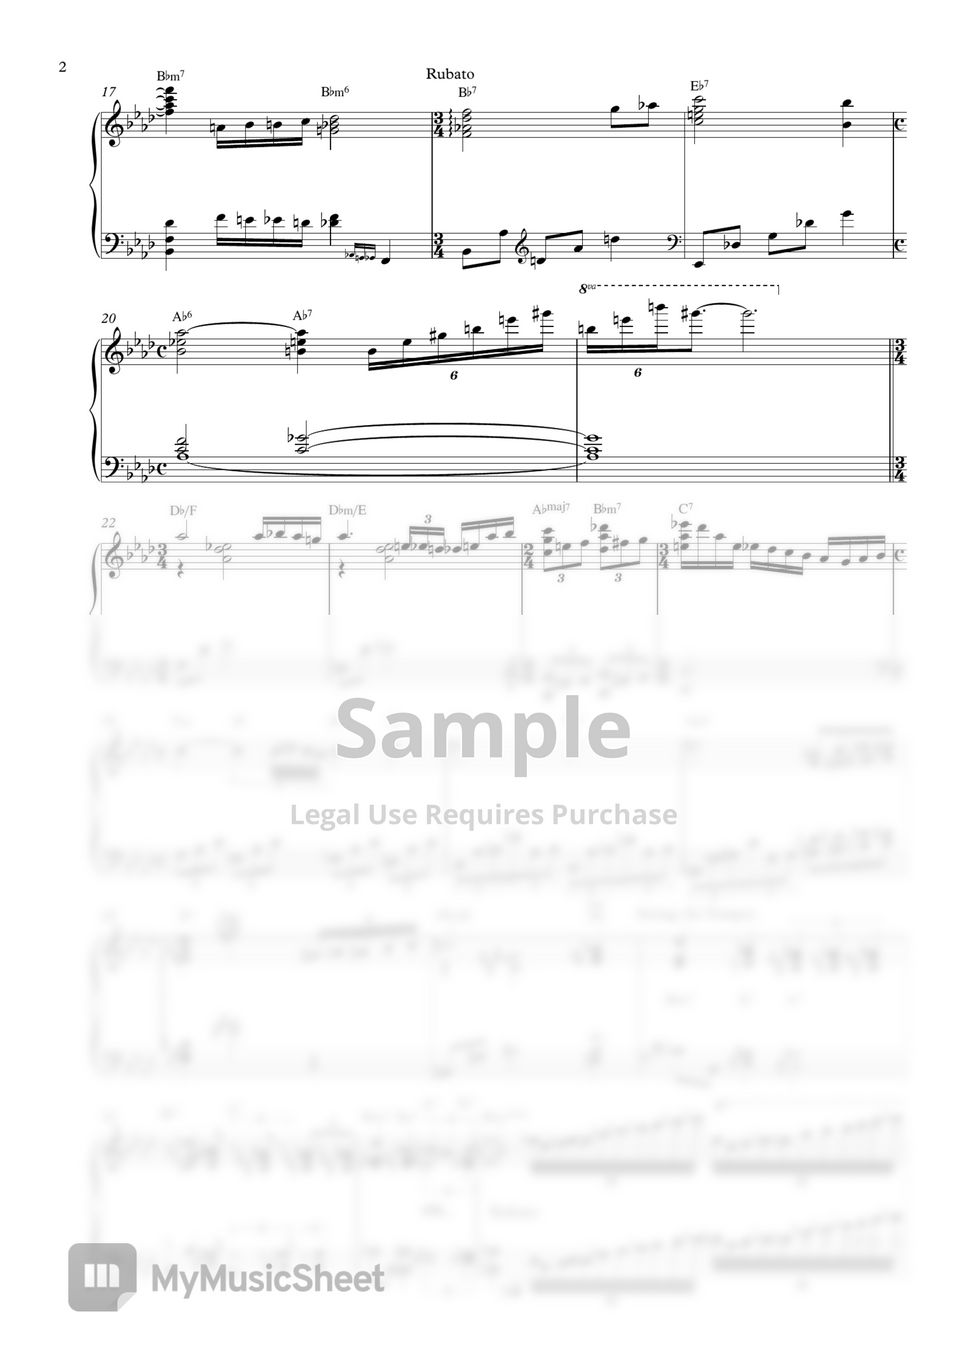 Liszt - Love Dream(Liebestraum No.3) (Jazz Piano Ver.) by Acoustic Ballad